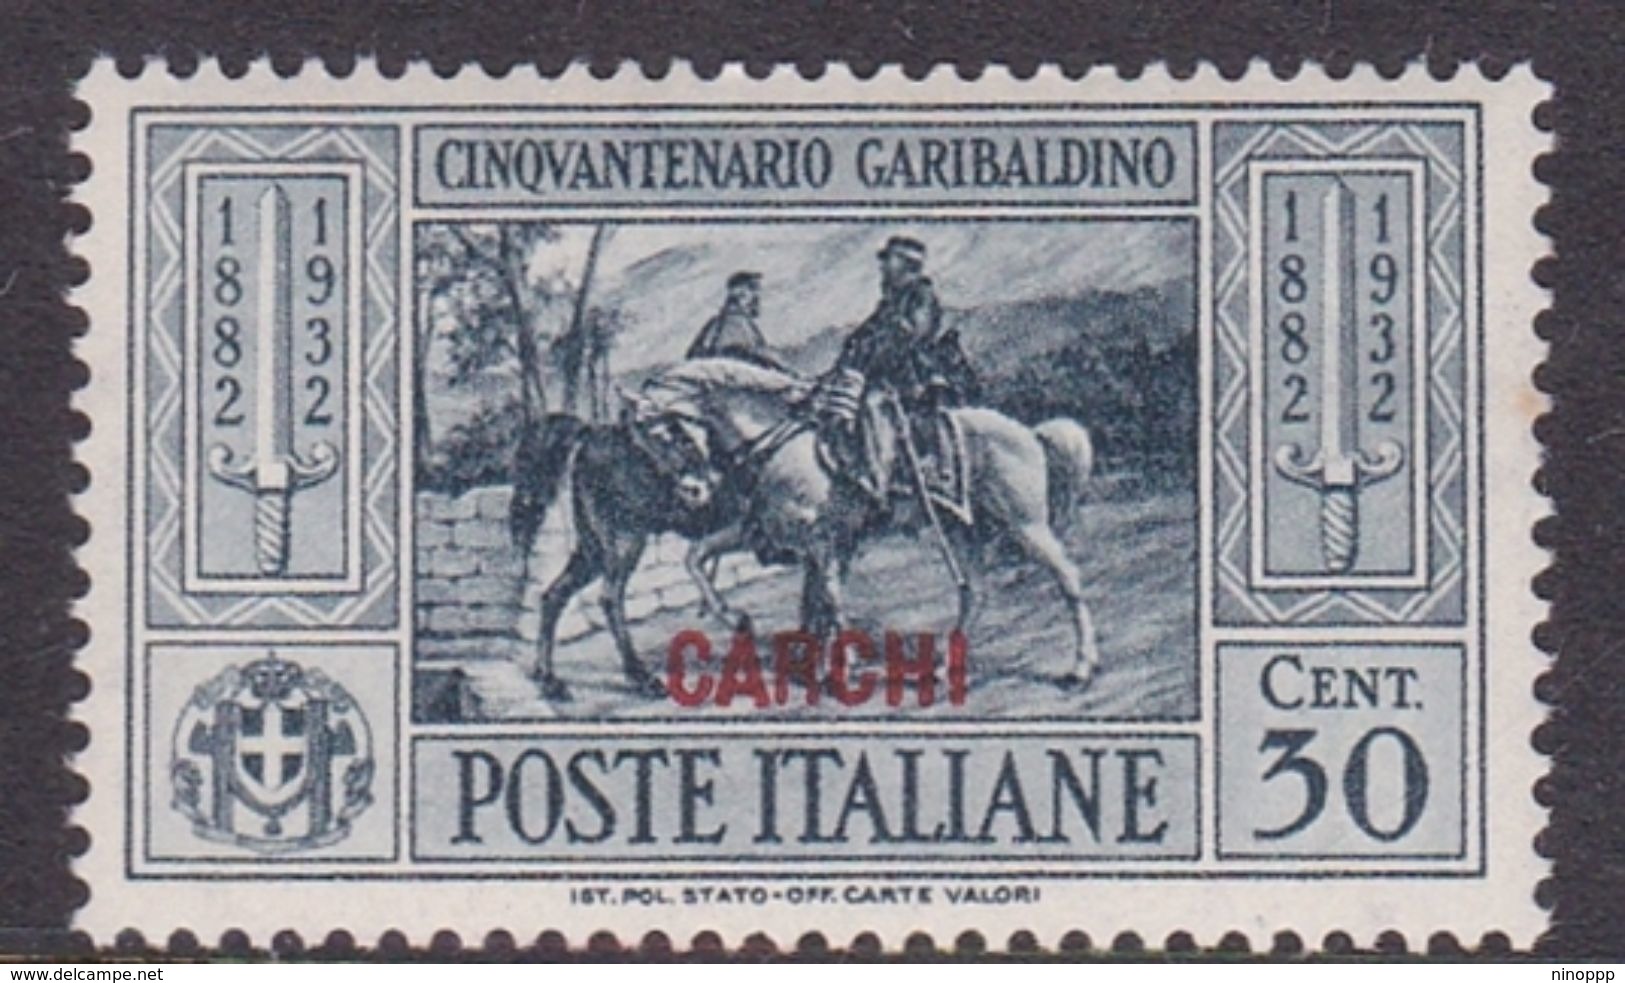 Italy-Colonies And Territories-Aegean-Carchi S 20 1932 Garibaldi 30c Bluish Slate MNH - Egée (Carchi)